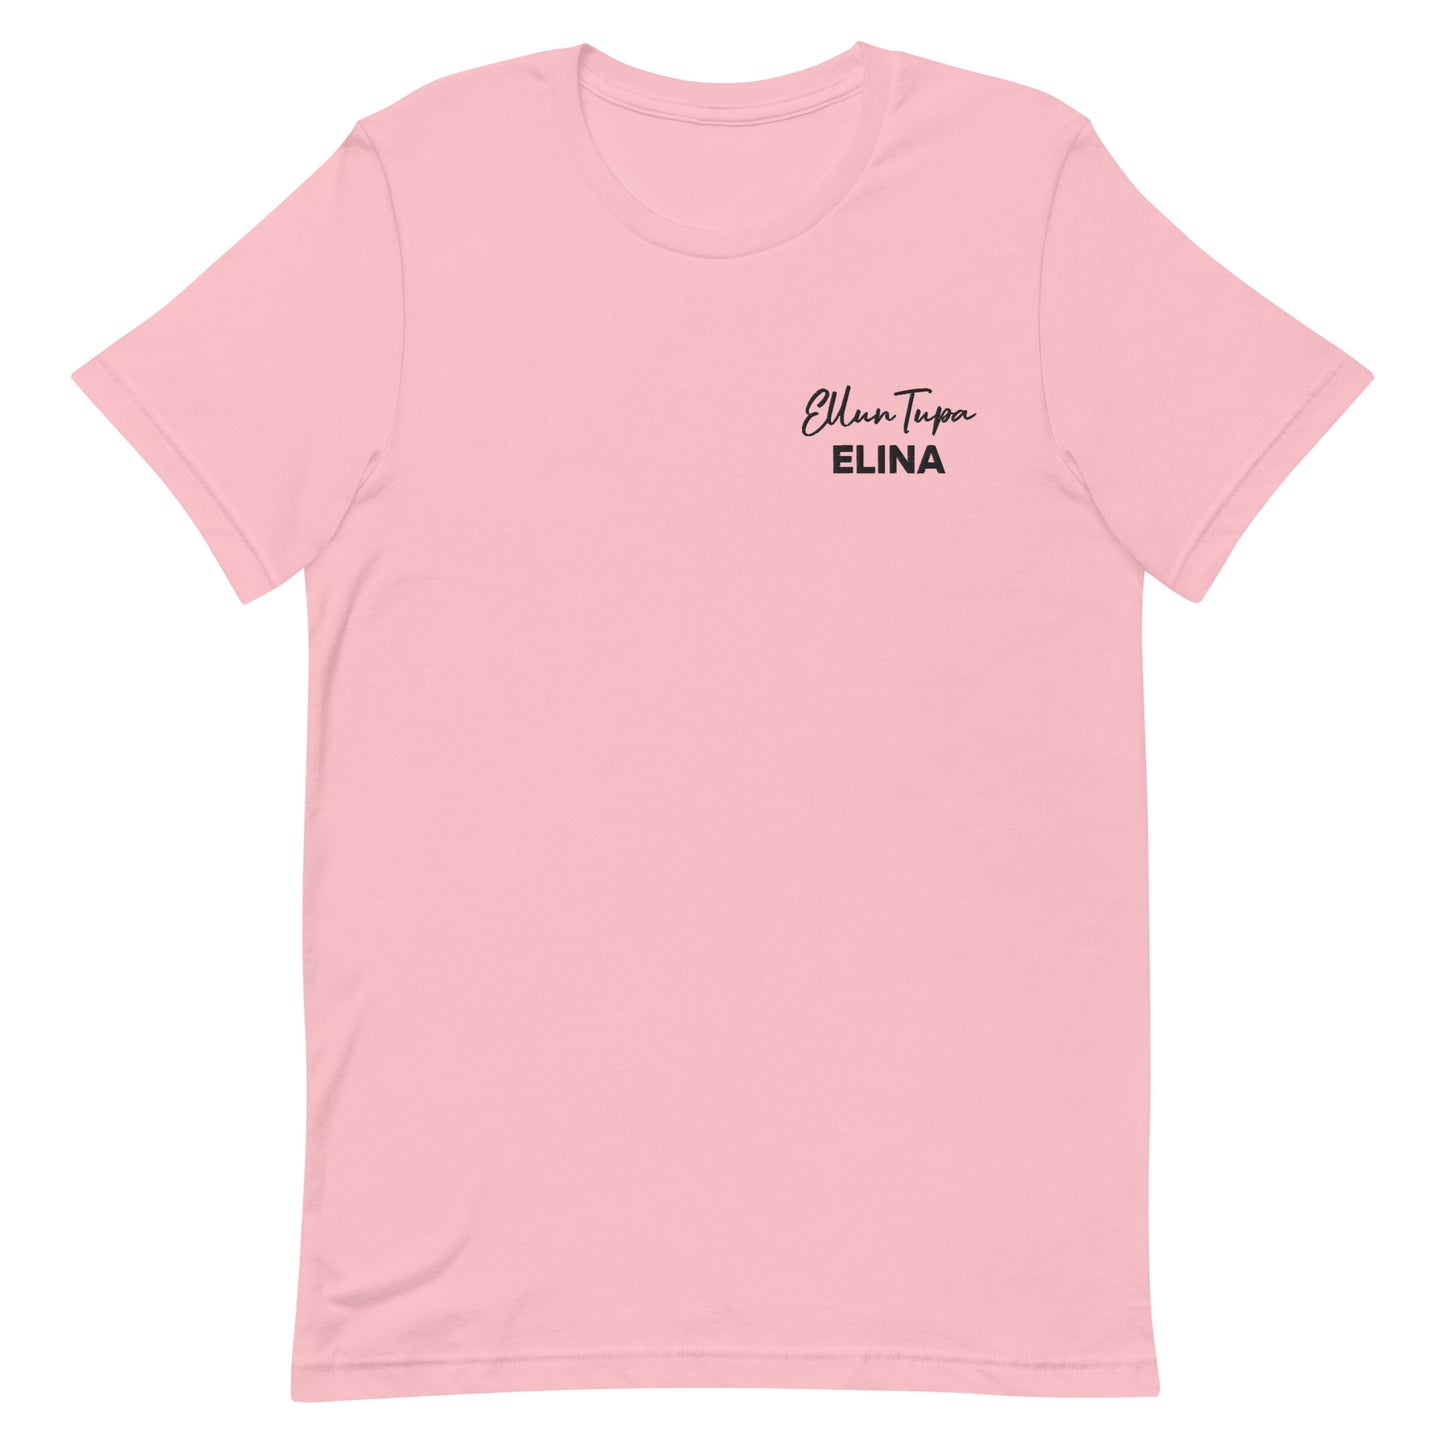 "EllunTupa" t-shirt, pink